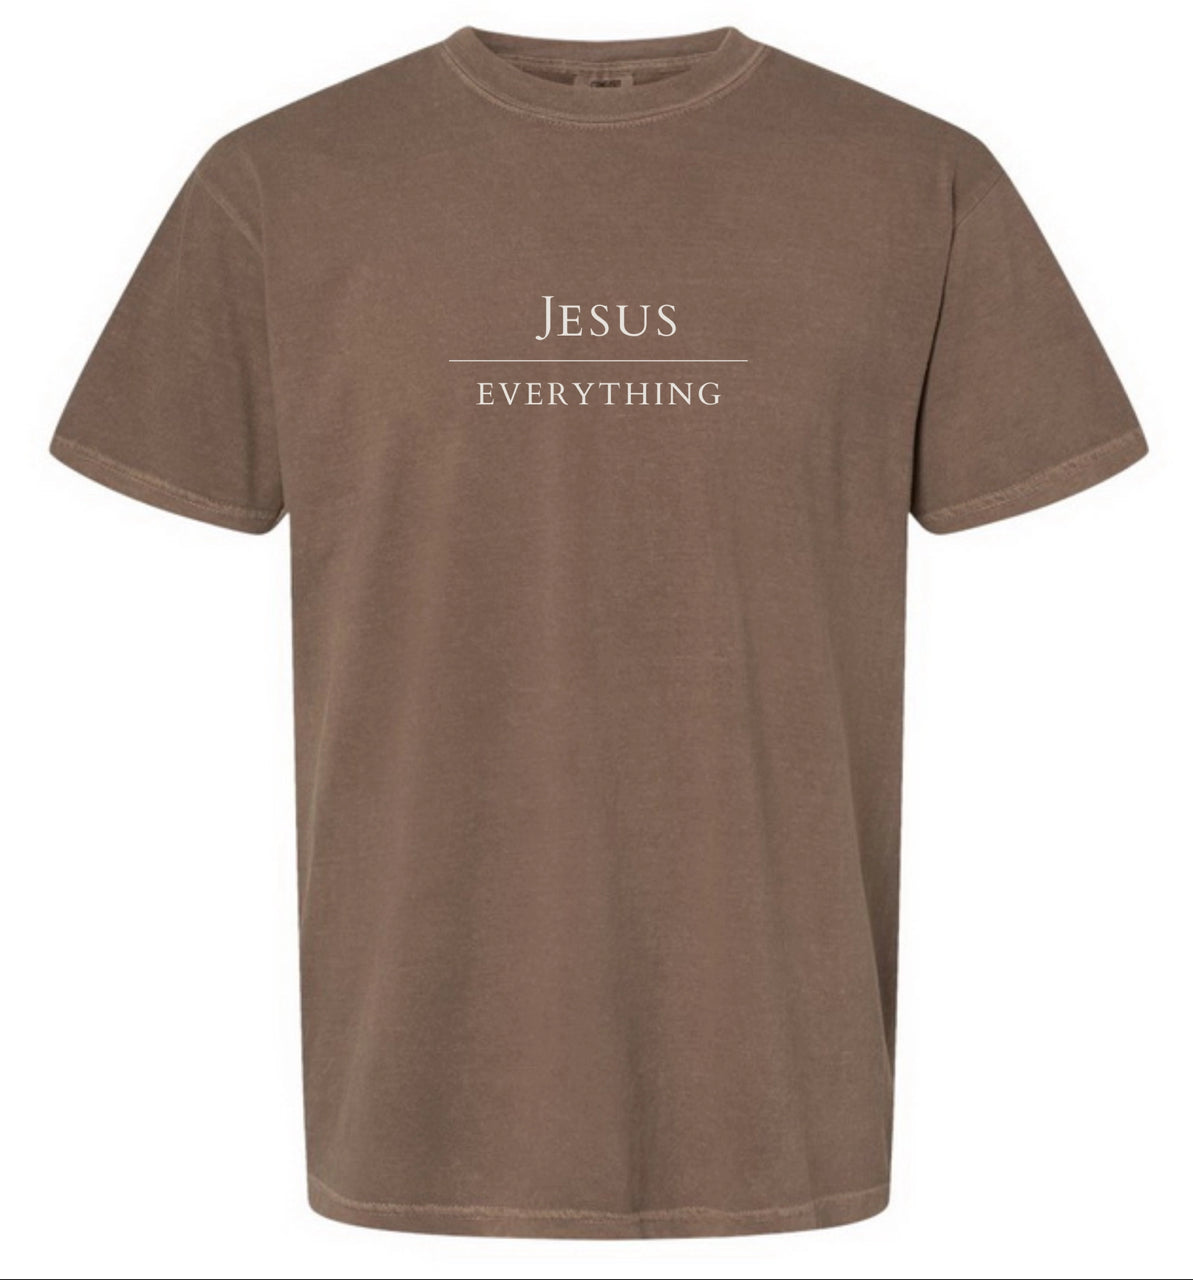 Jesus Over Everything Tee